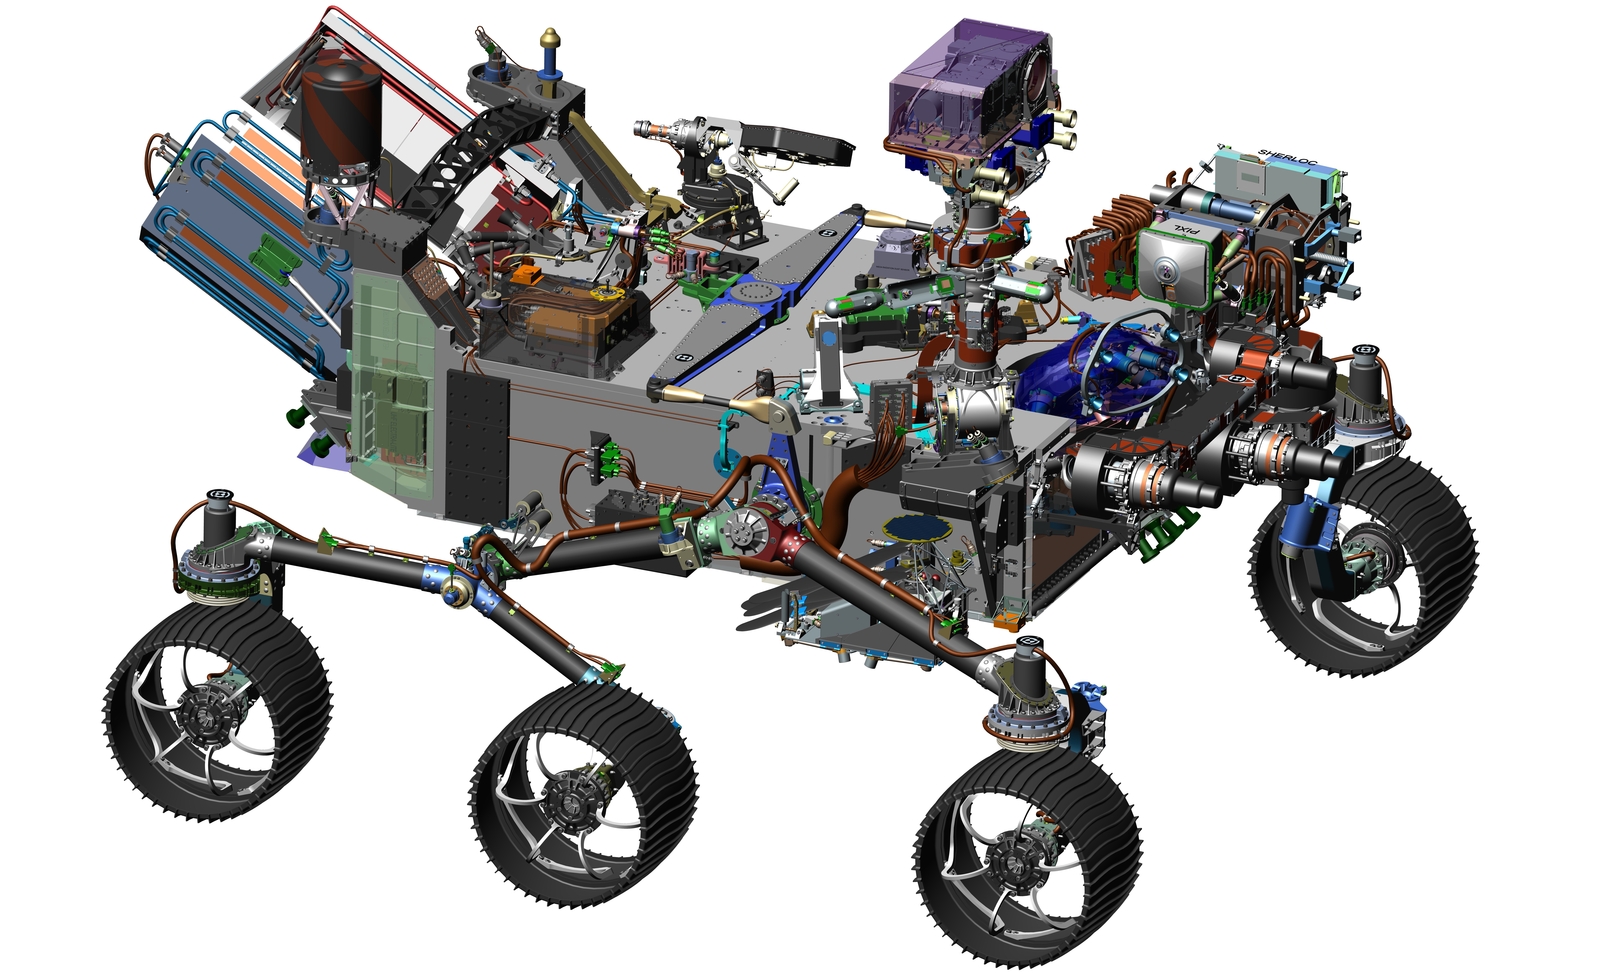 Computer-Design Drawing for NASA's 2020 Mars Rover